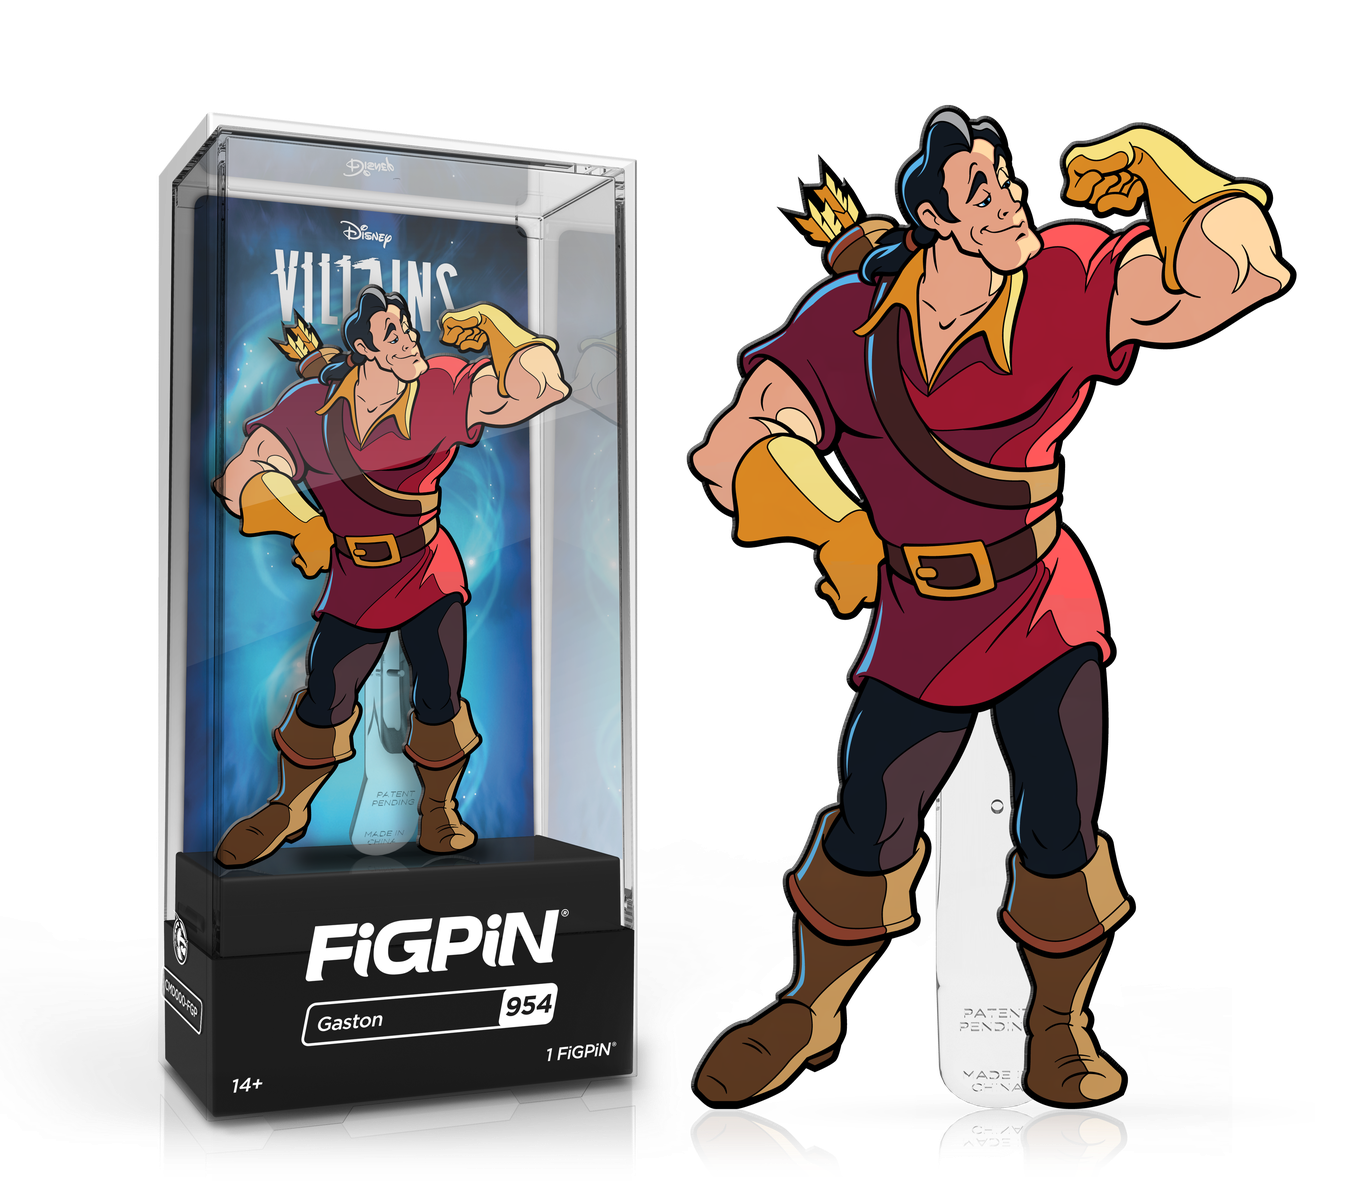 Gaston (954)